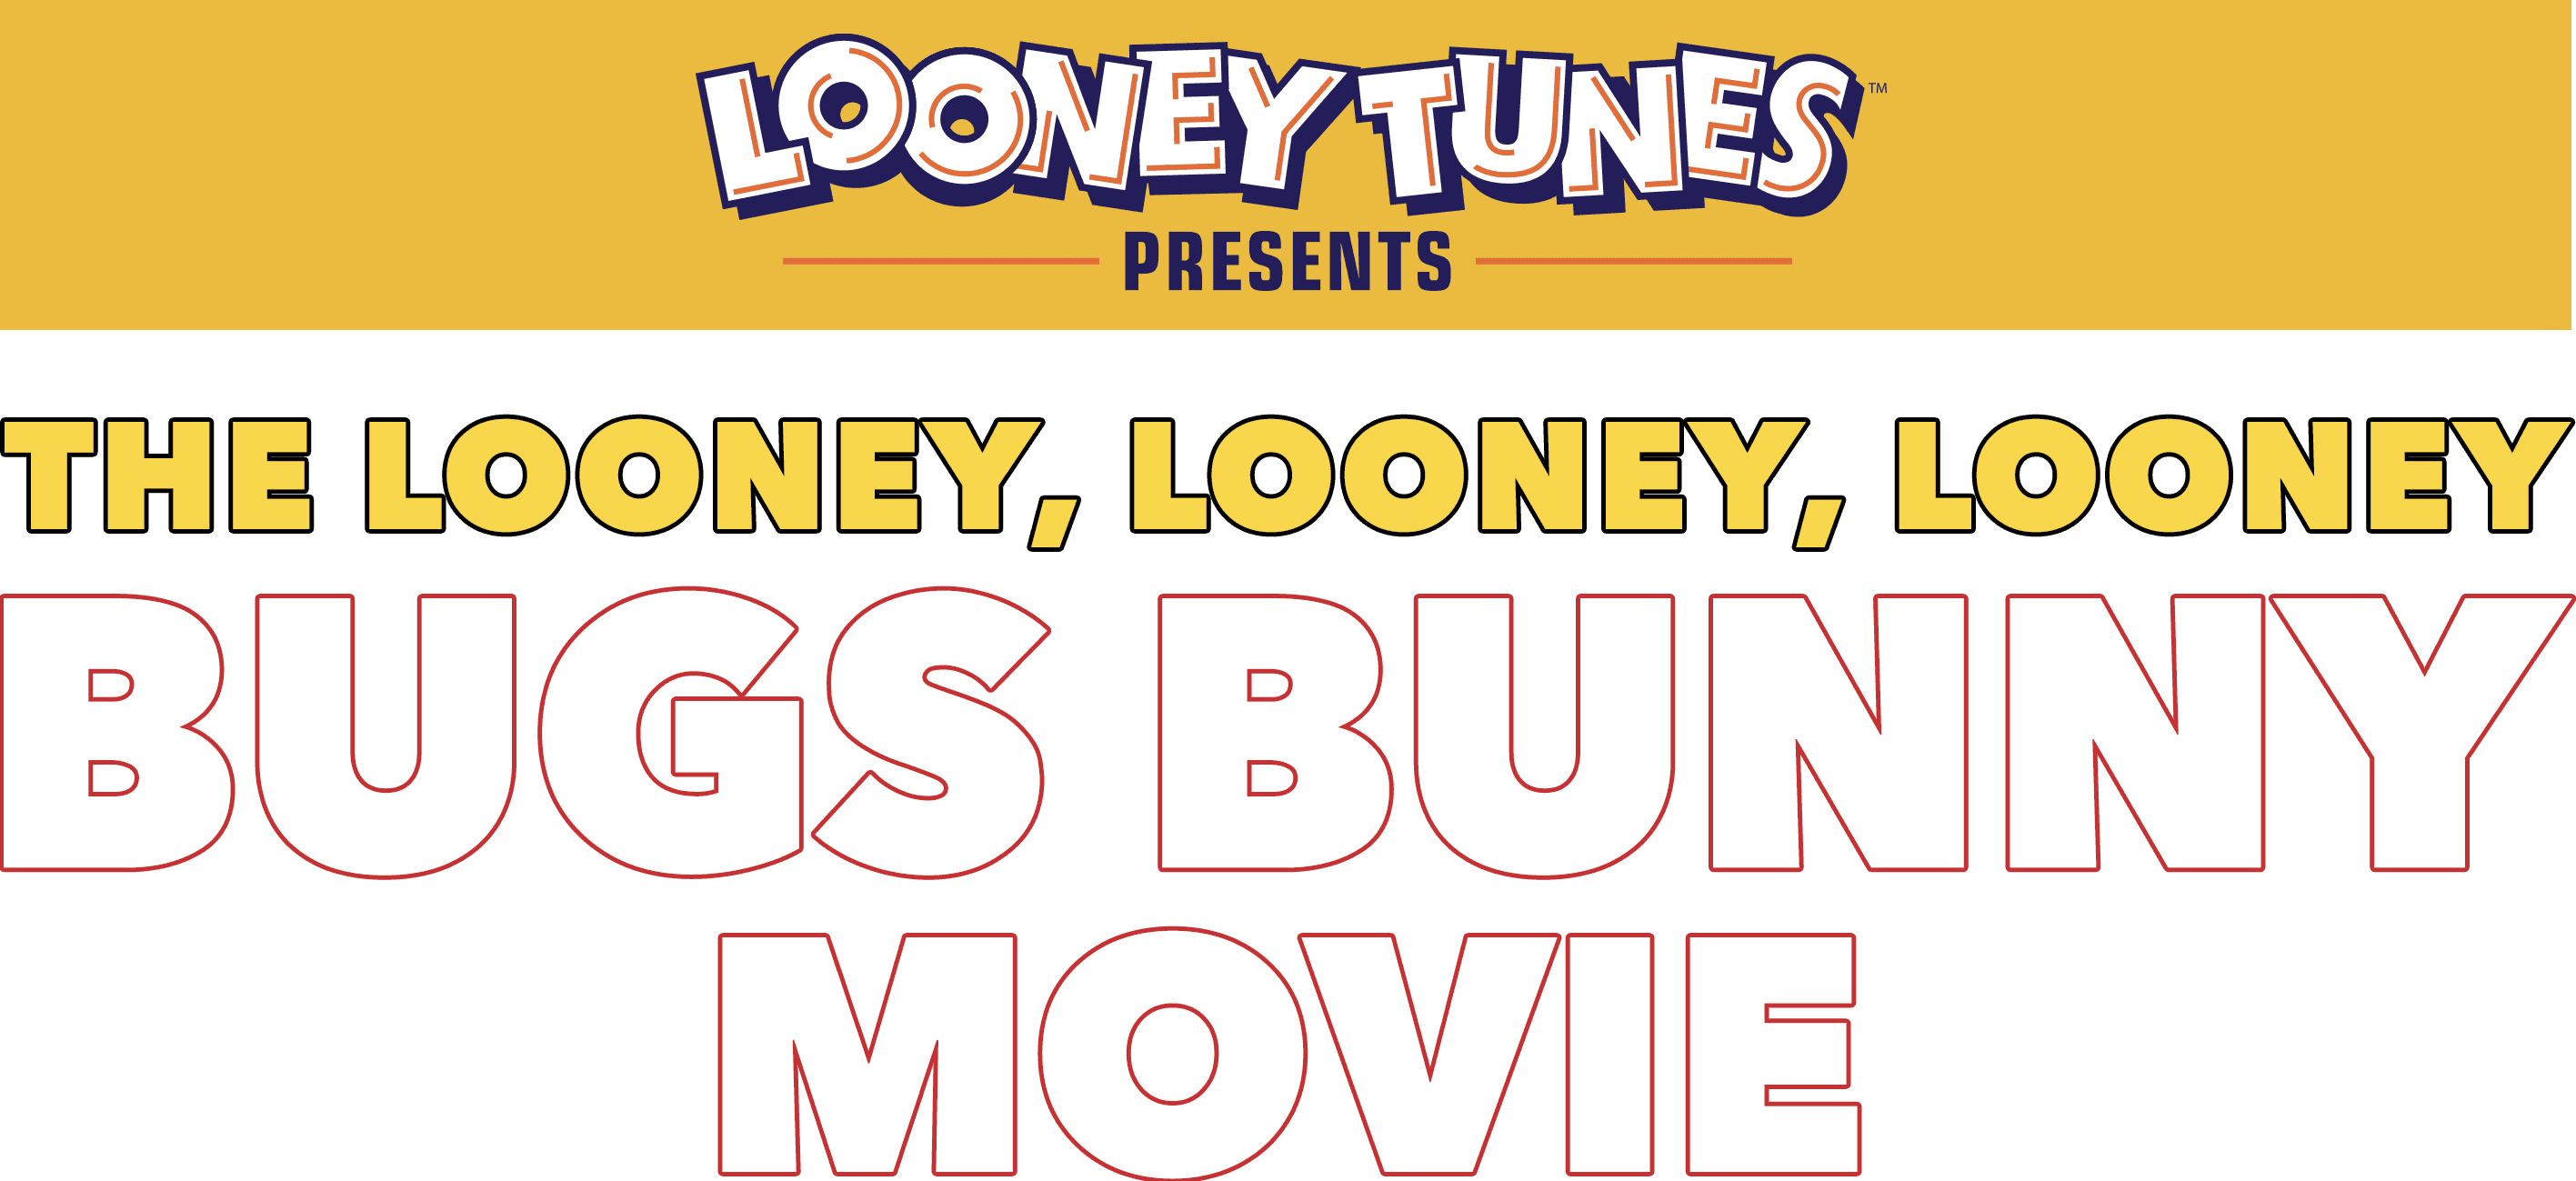 The Looney, Looney, Looney Bugs Bunny Movie logo